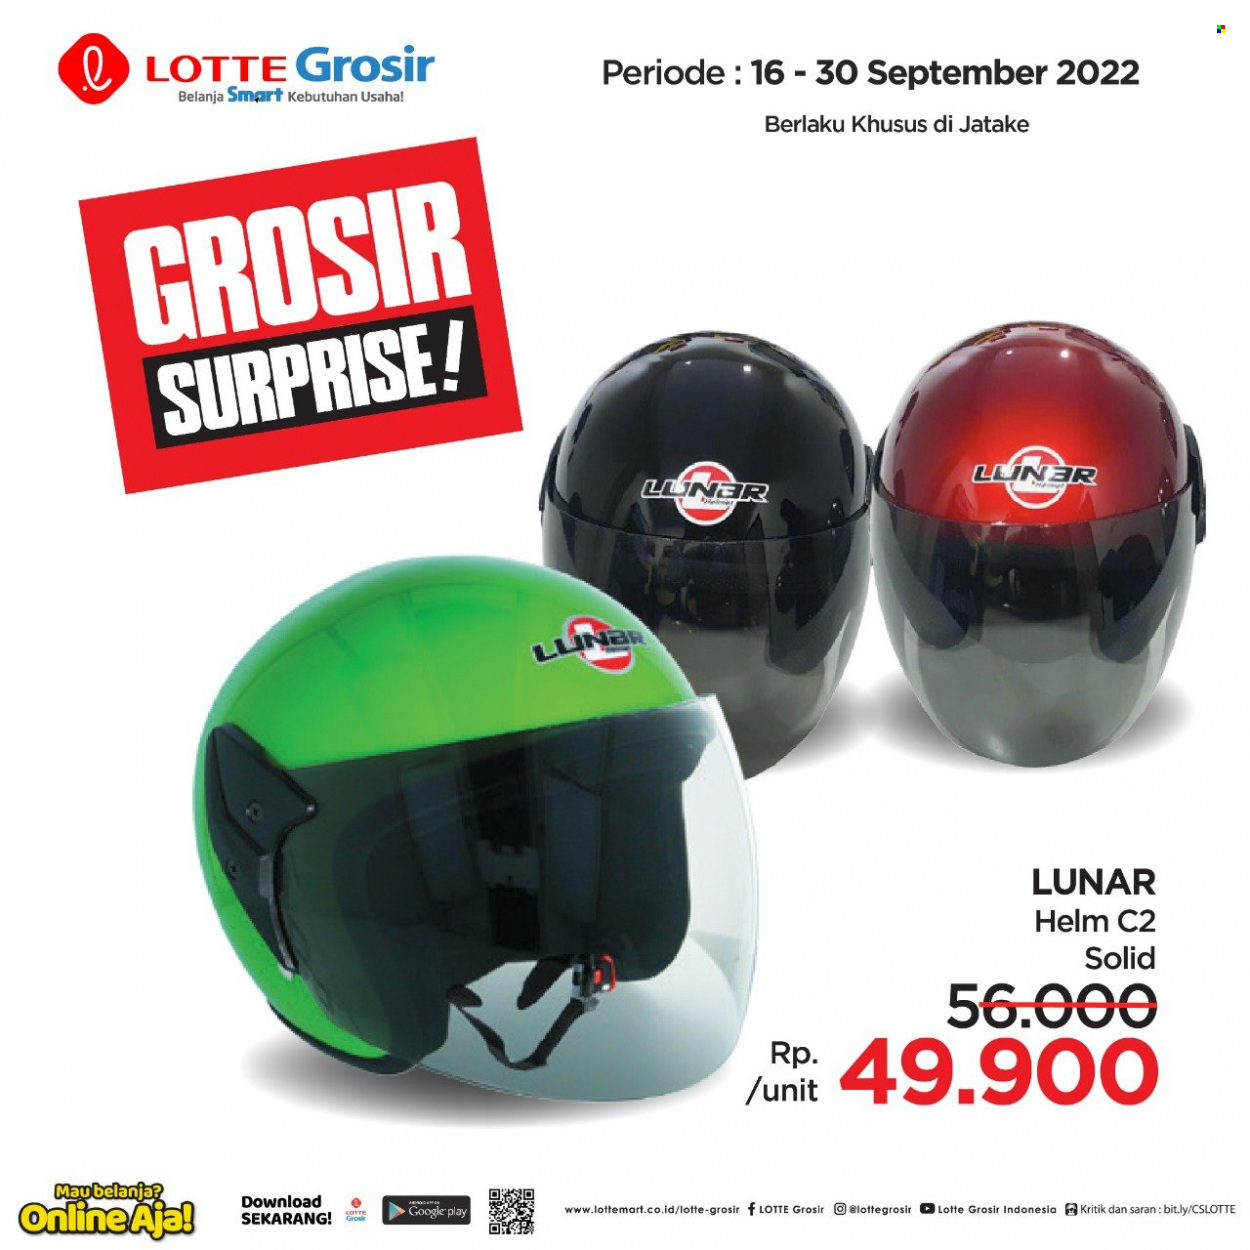 thumbnail - Promo LOTTE Grosir - 09/16/2022 - 09/30/2022 - Produk diskon - solid, helm. Halaman 1.